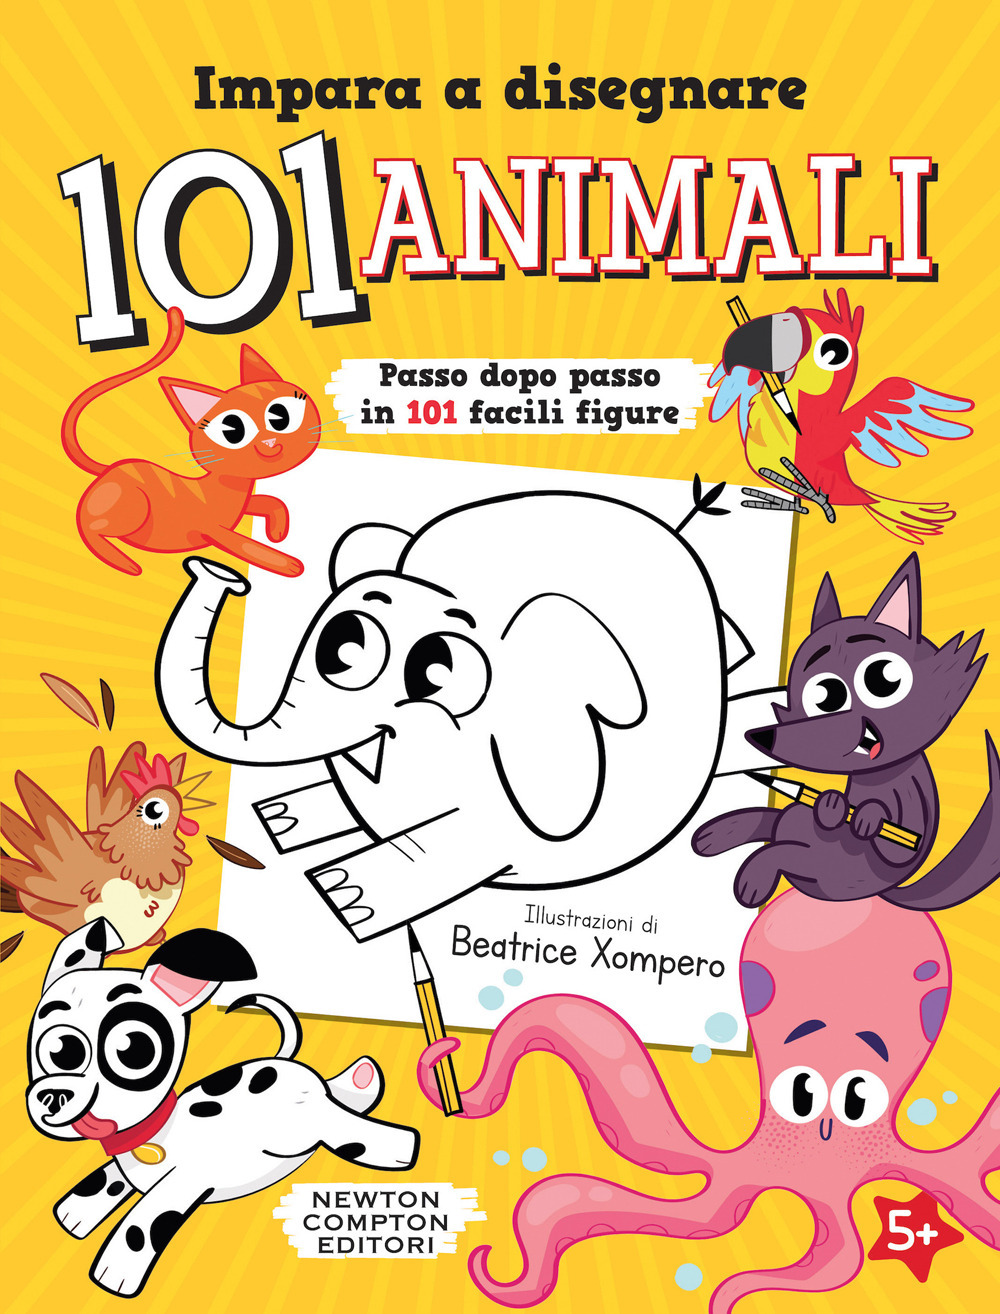 Impara a disegnare 101 animali. Ediz. illustrata